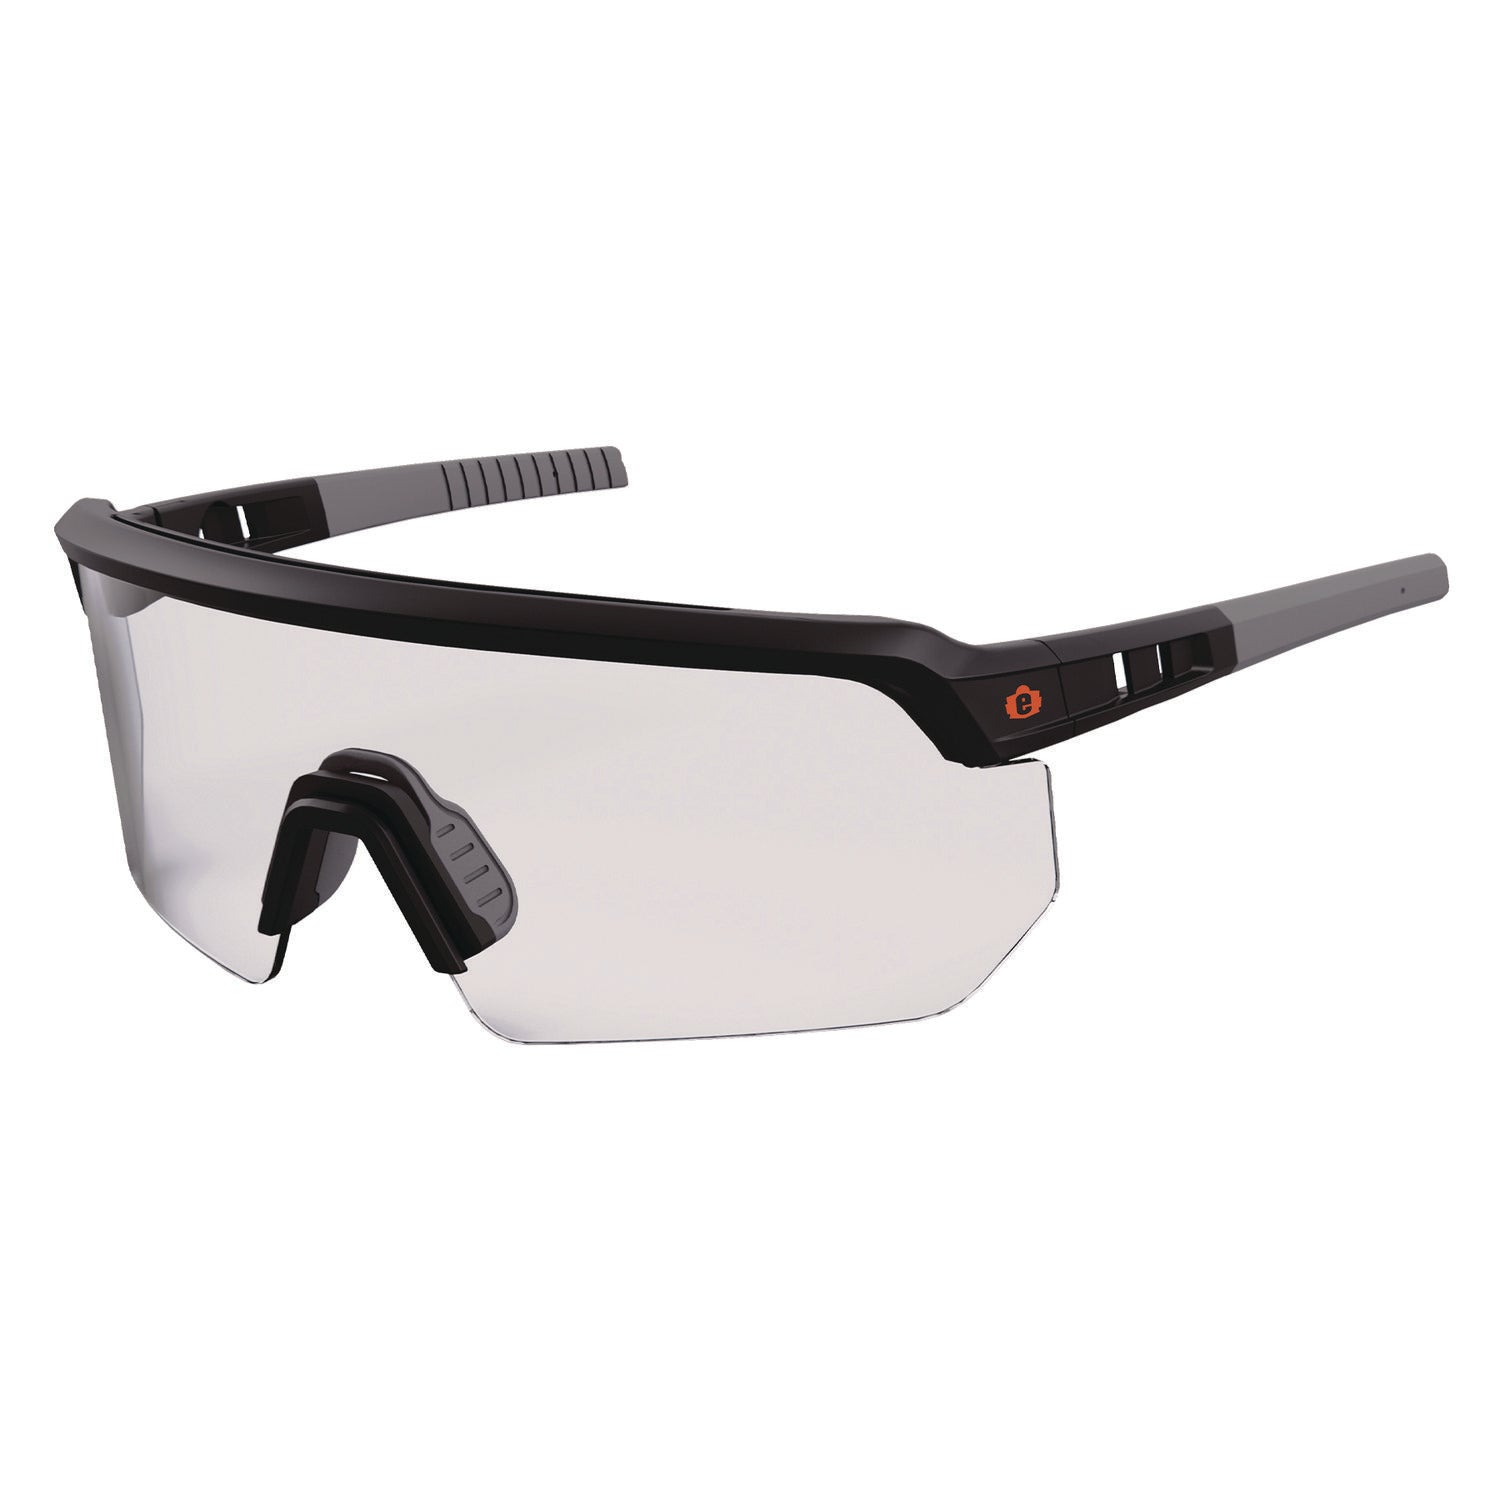 skullerz-aegir-safety-glasses-matte-black-nylon-impact-frame-clear-polycarbonate-lens-ships-in-1-3-business-days_ego55001 - 1